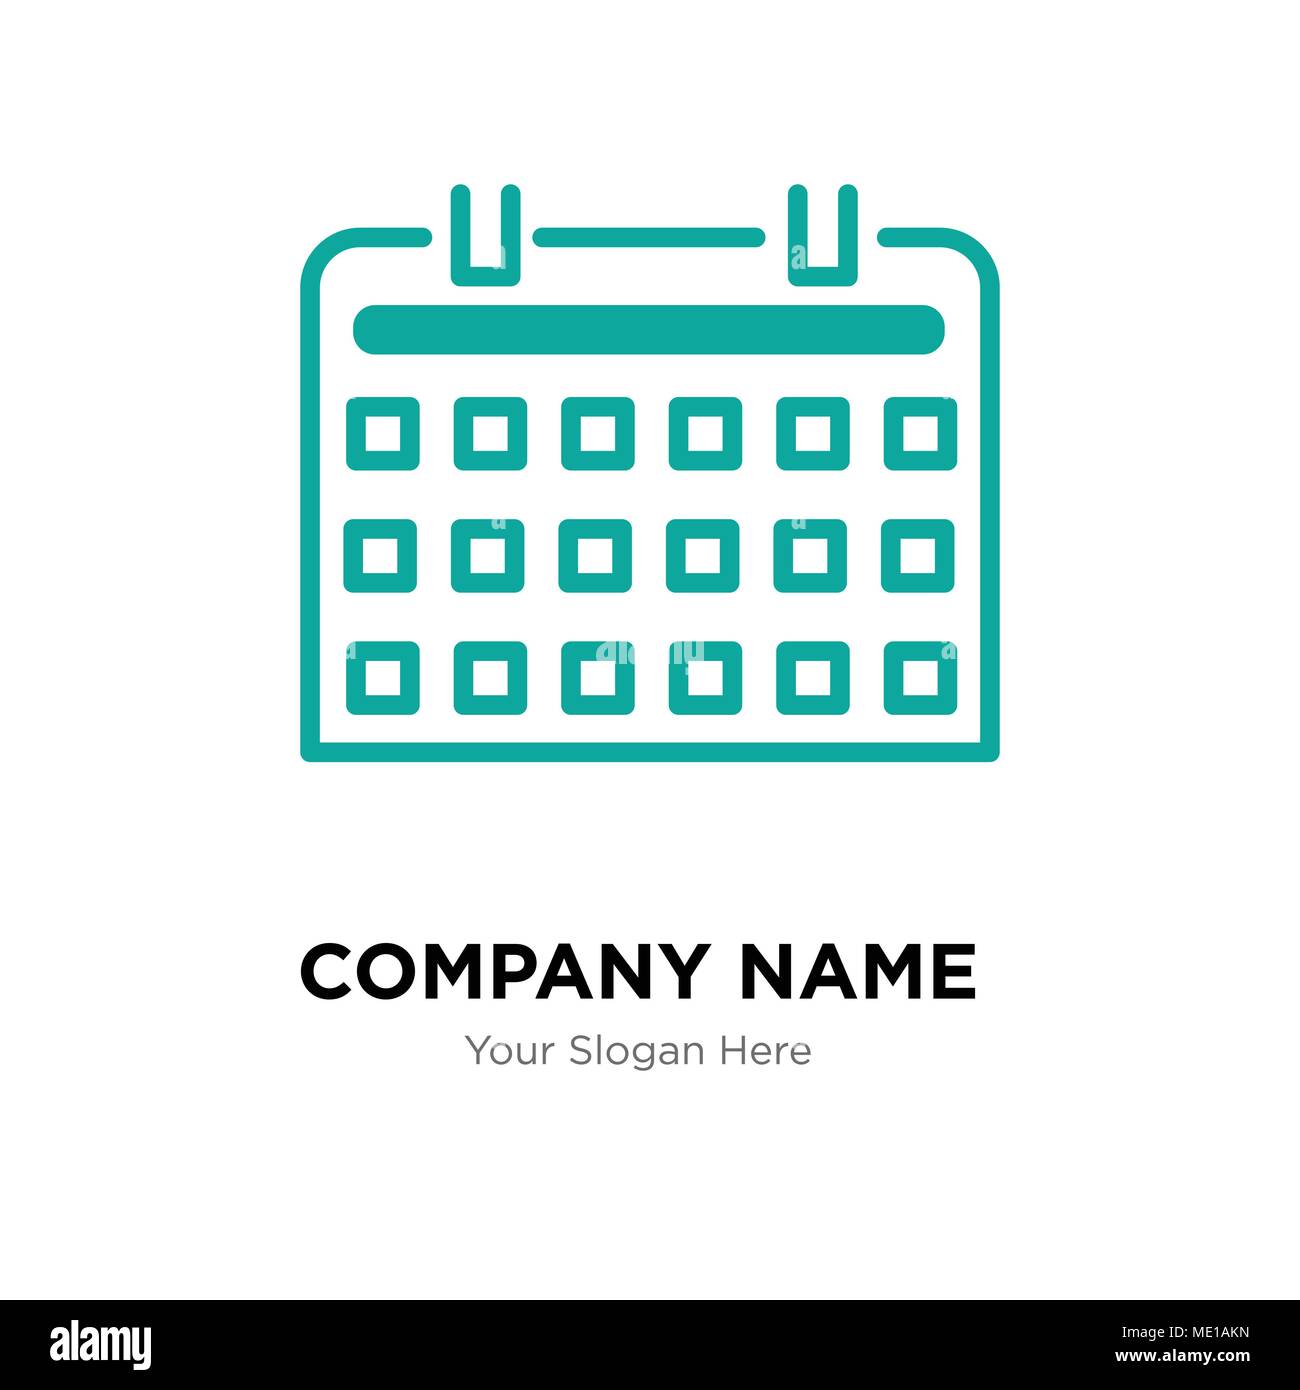 keyboard company logo design template, Business corporate vector icon Stock Vector